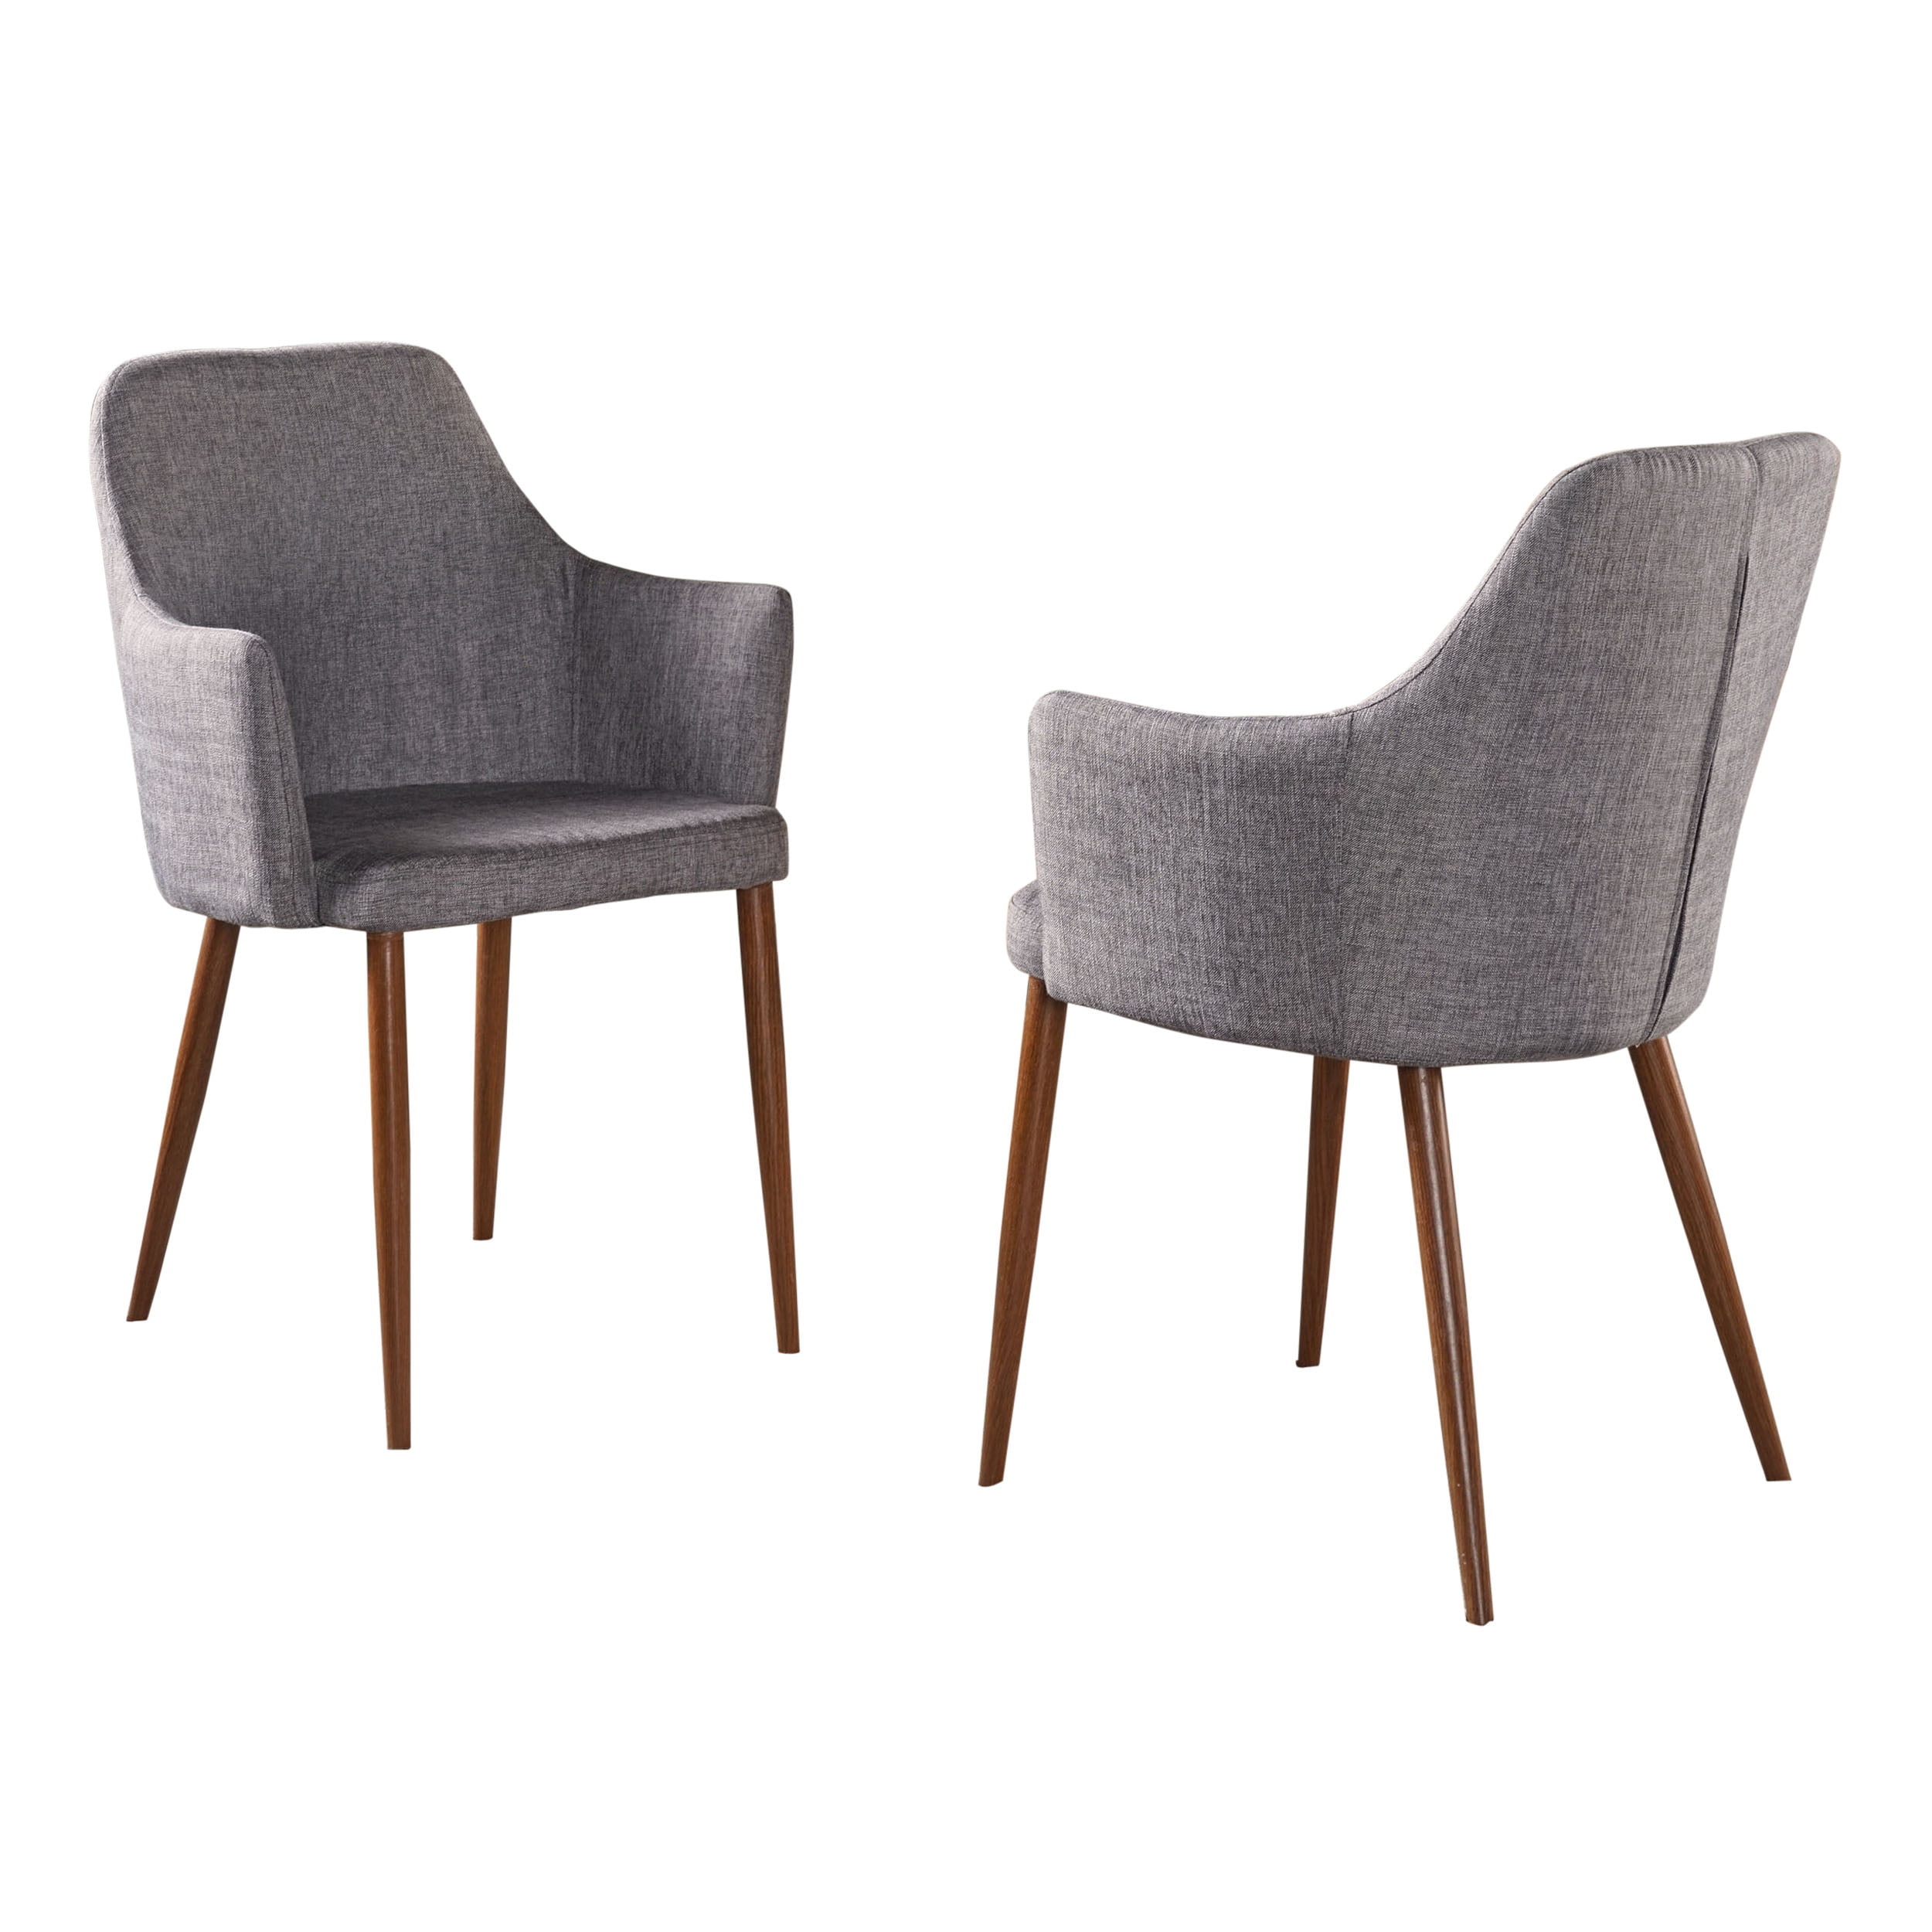 Gdf Studio Serra Mid Century Modern, Light Grey Dining Chairs Wooden Legs